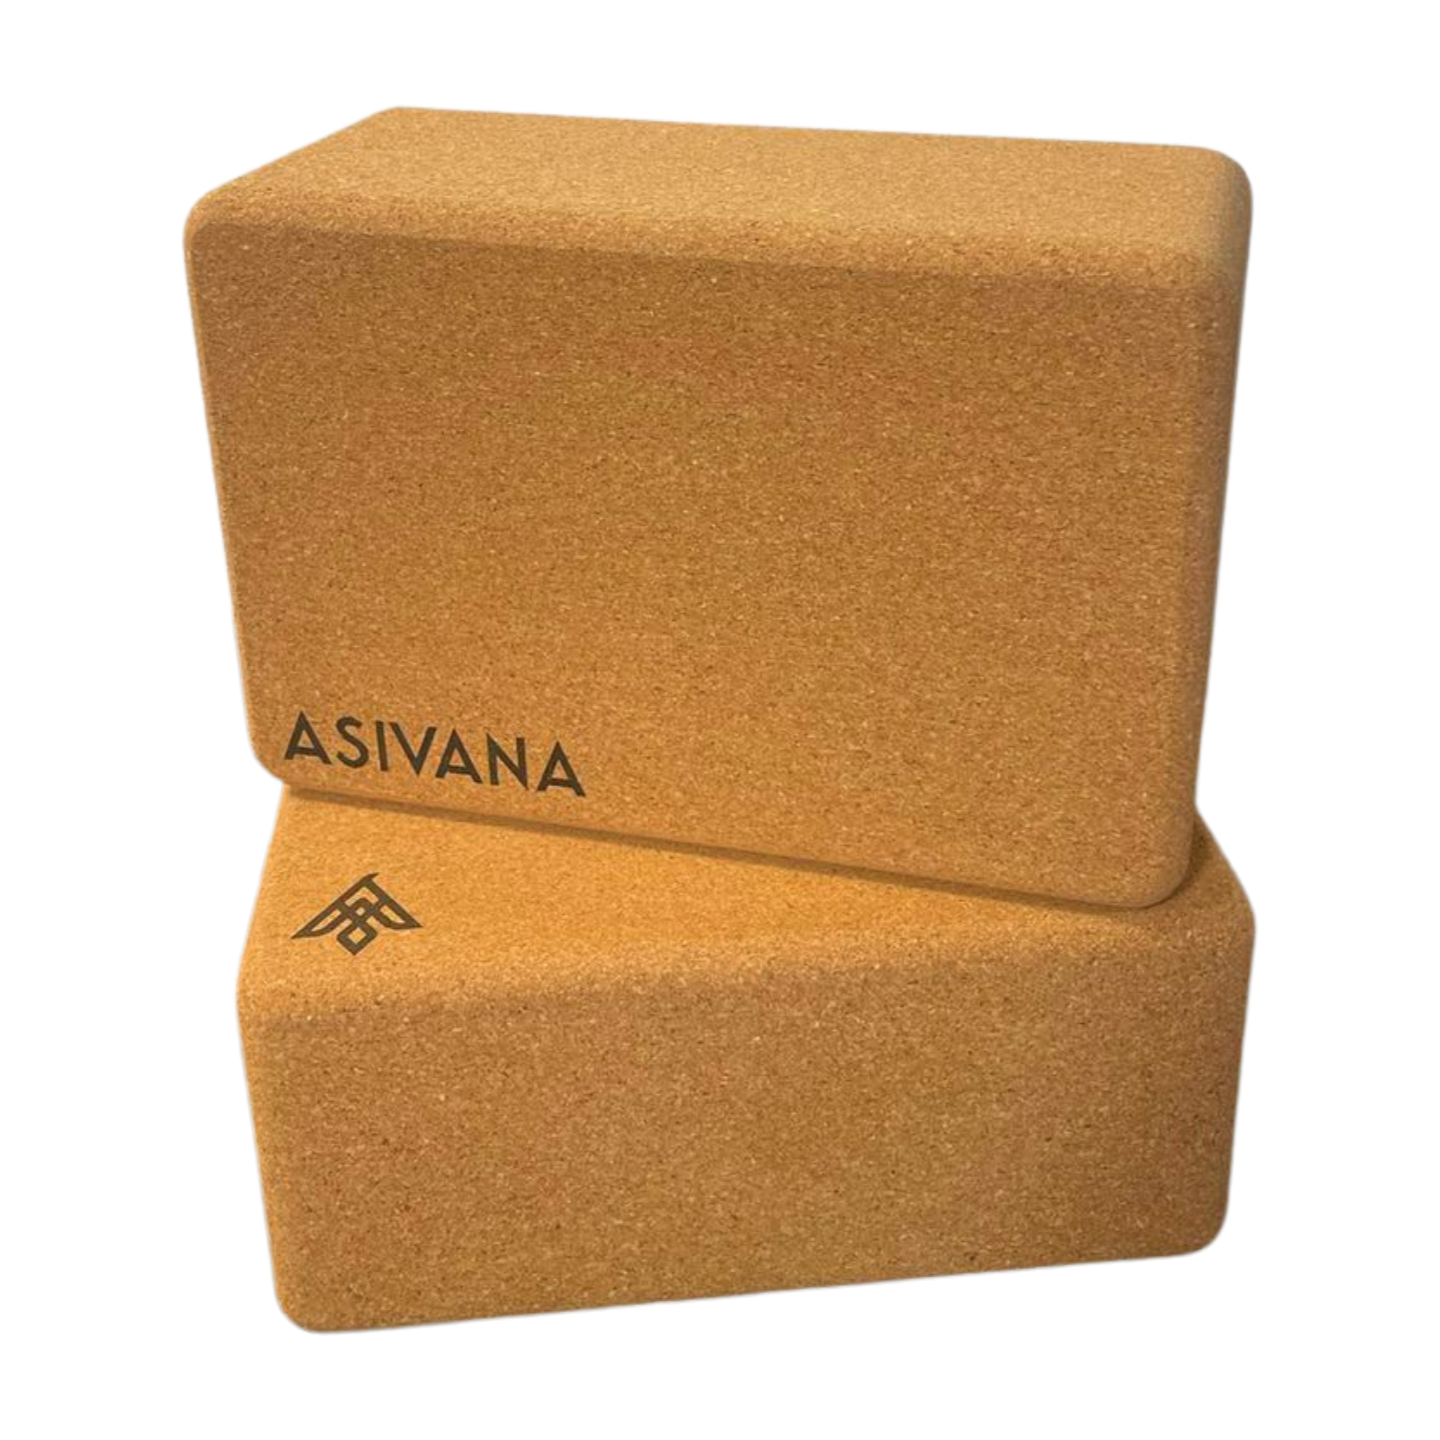 EcoBlock Cork Yoga Block - Made with FSC™ Certified Cork by Asivana Yoga